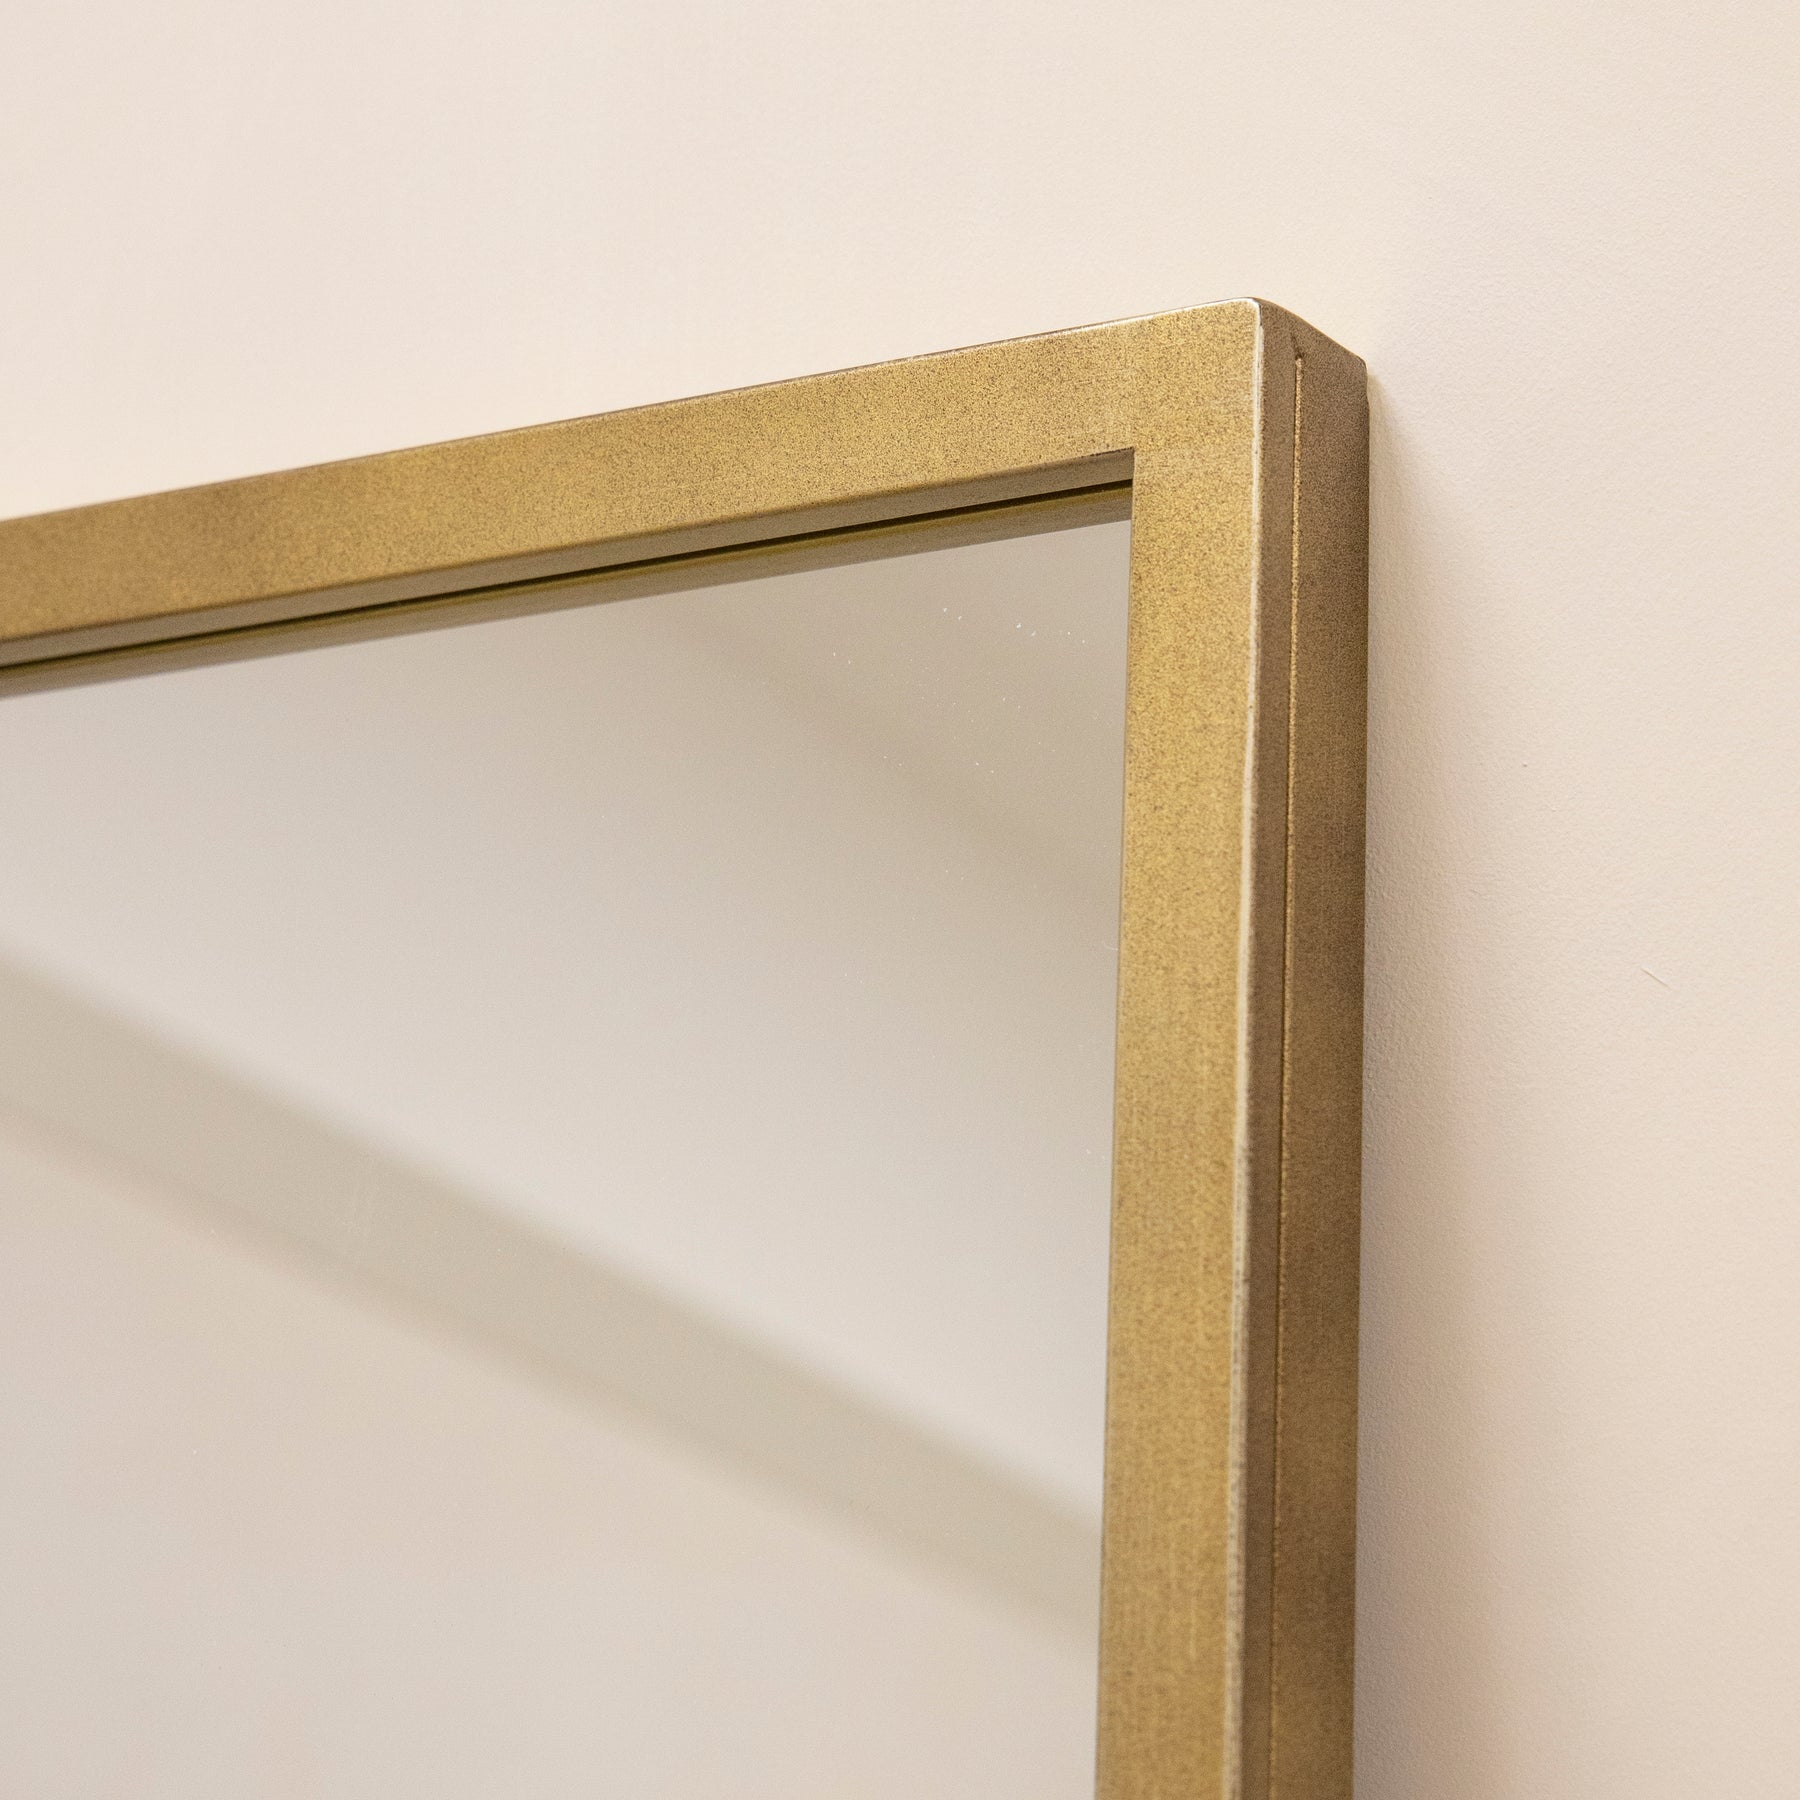 Camden - Gold Industrial Full Length Metal Window Mirror 179cm x 119cm